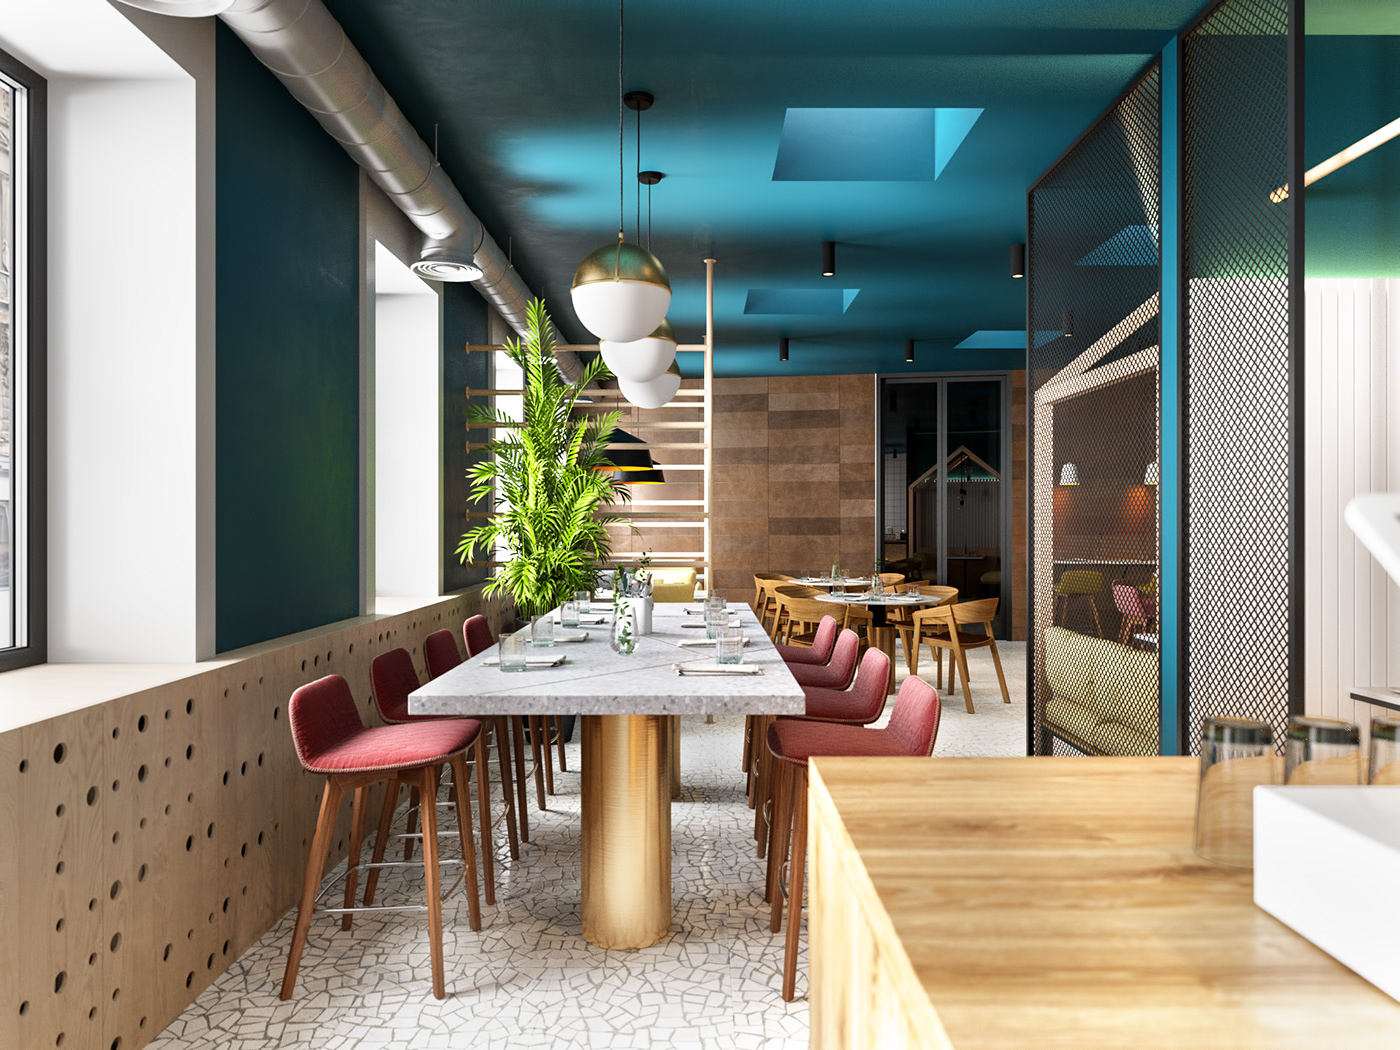 Interior design bar cafe restaurant